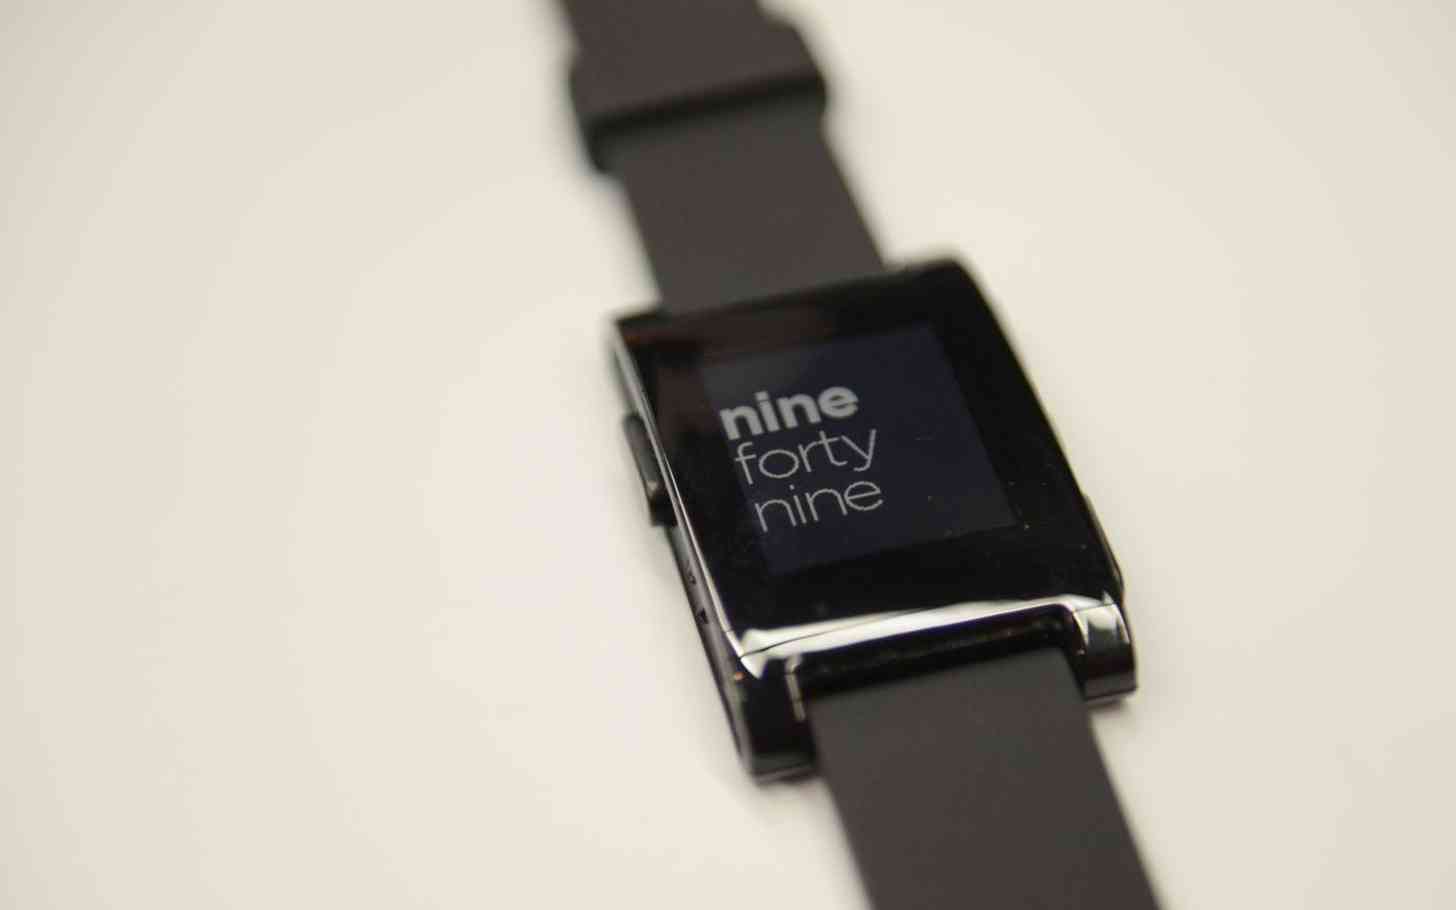 Pebble smartwatch hands-on